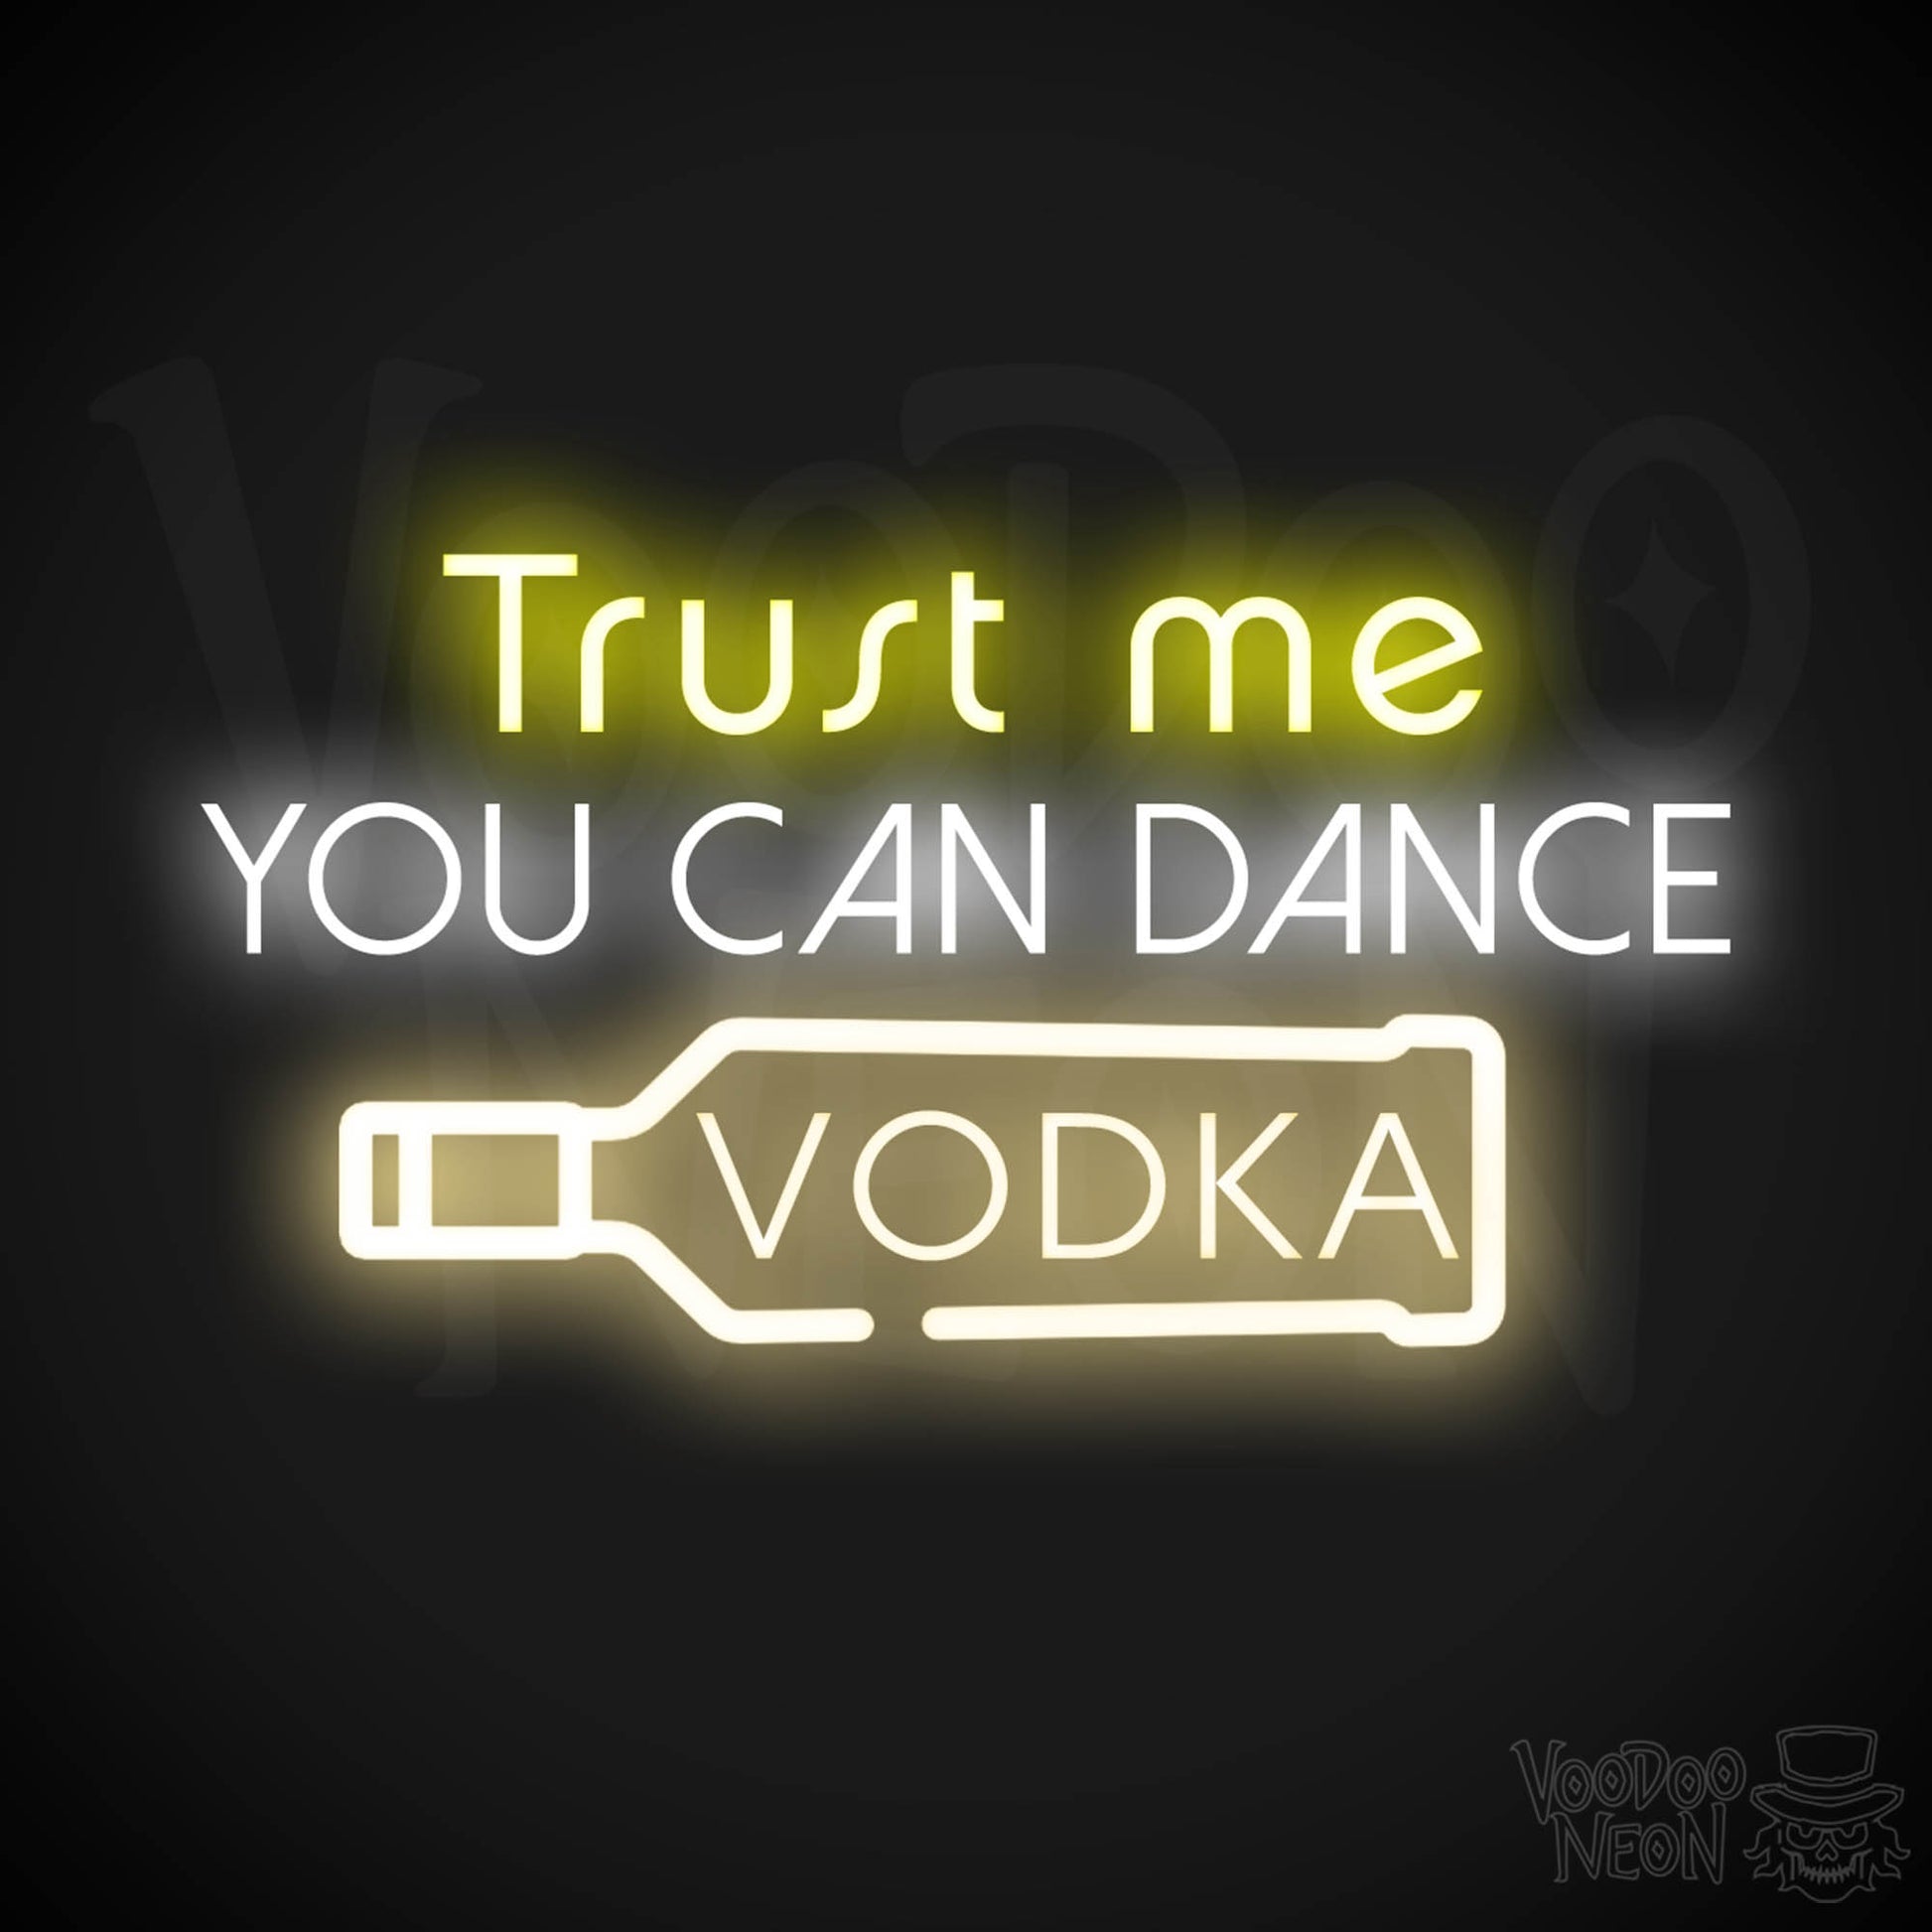 Trust Me You Can Dance Vodka Neon Sign - Vodka Bar Sign - LED Signs - Color Multi-Color